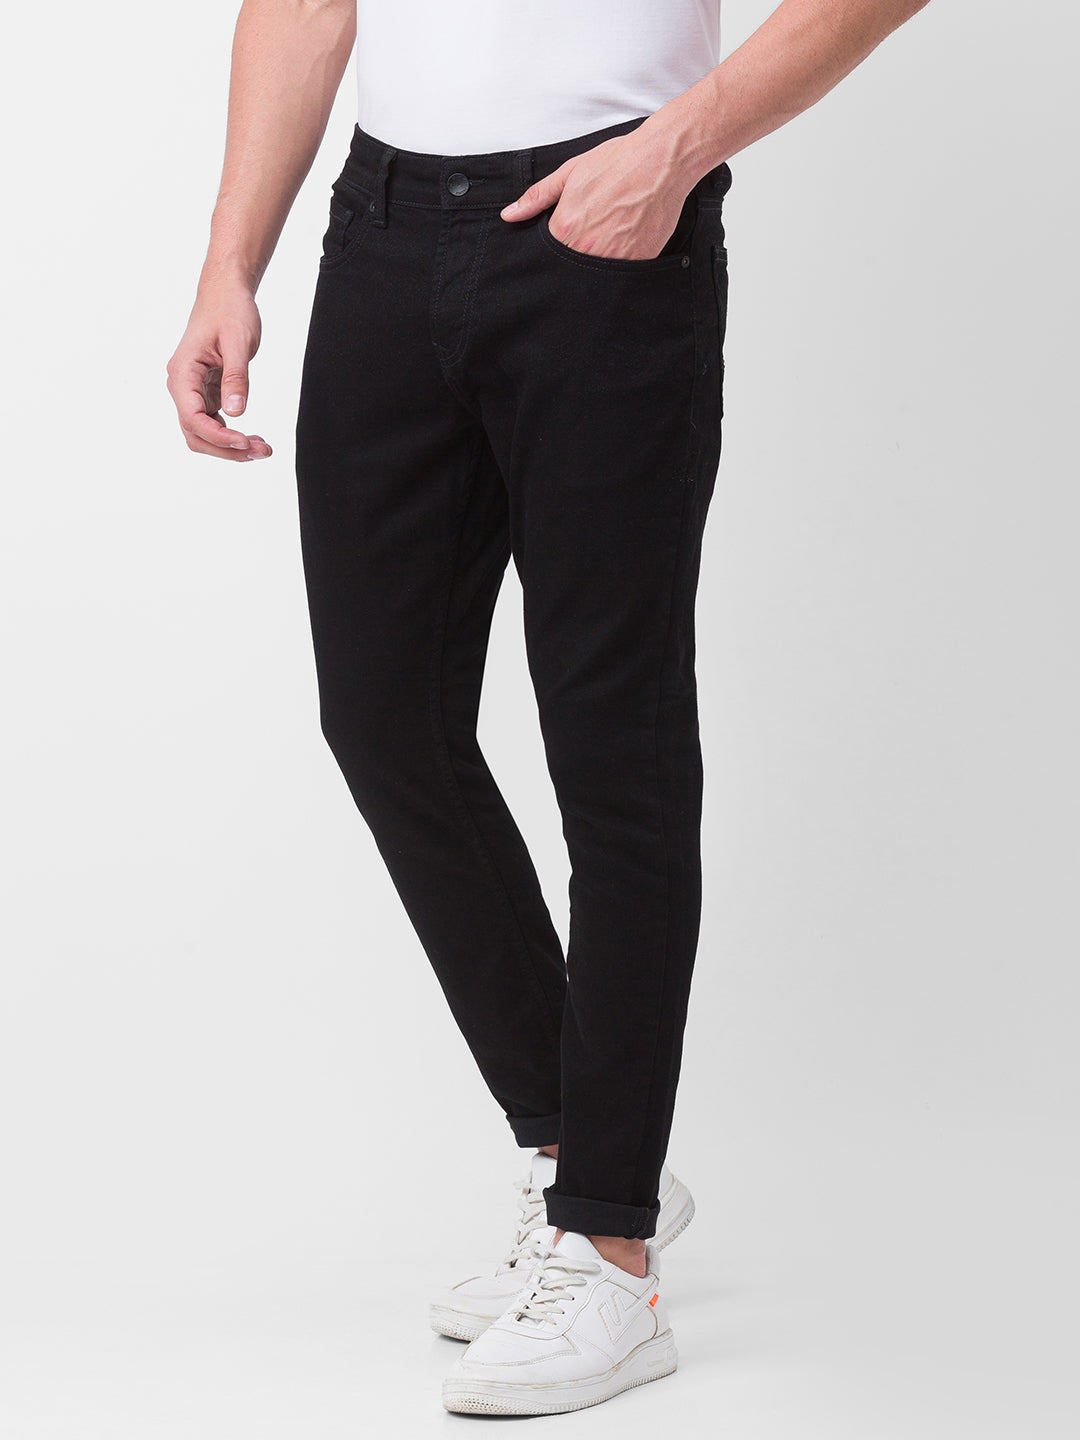 Spykar Black Cotton Slim Fit Tapered Length Jeans For Men (Kano)